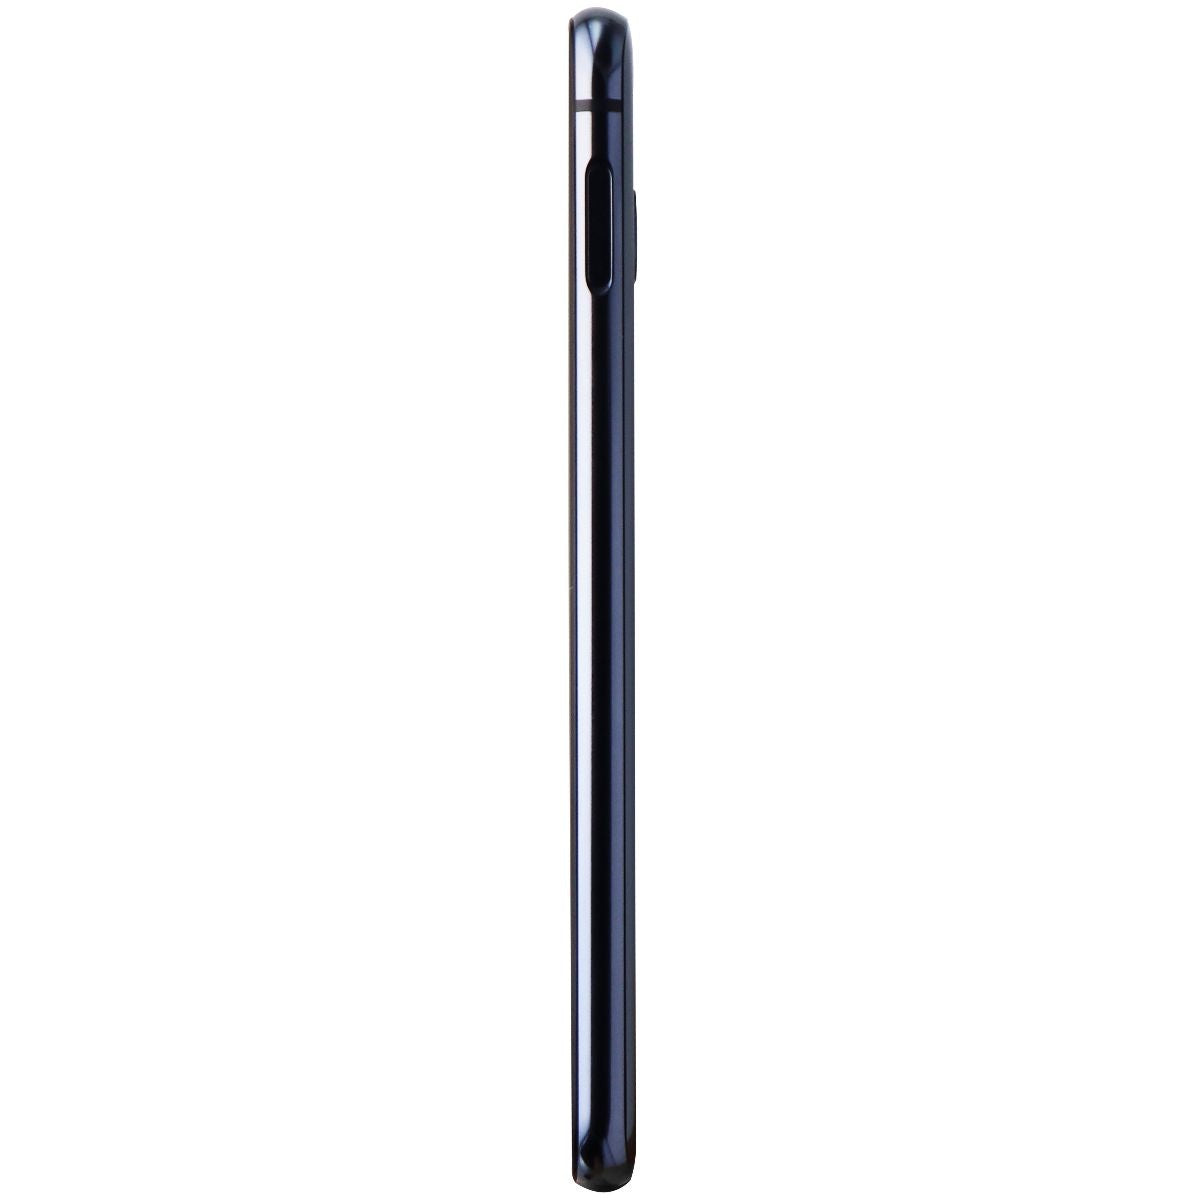 Samsung Galaxy S10e Smartphone (SM-G970U) Verizon Locked - 128GB / Black Cell Phones & Smartphones Samsung    - Simple Cell Bulk Wholesale Pricing - USA Seller